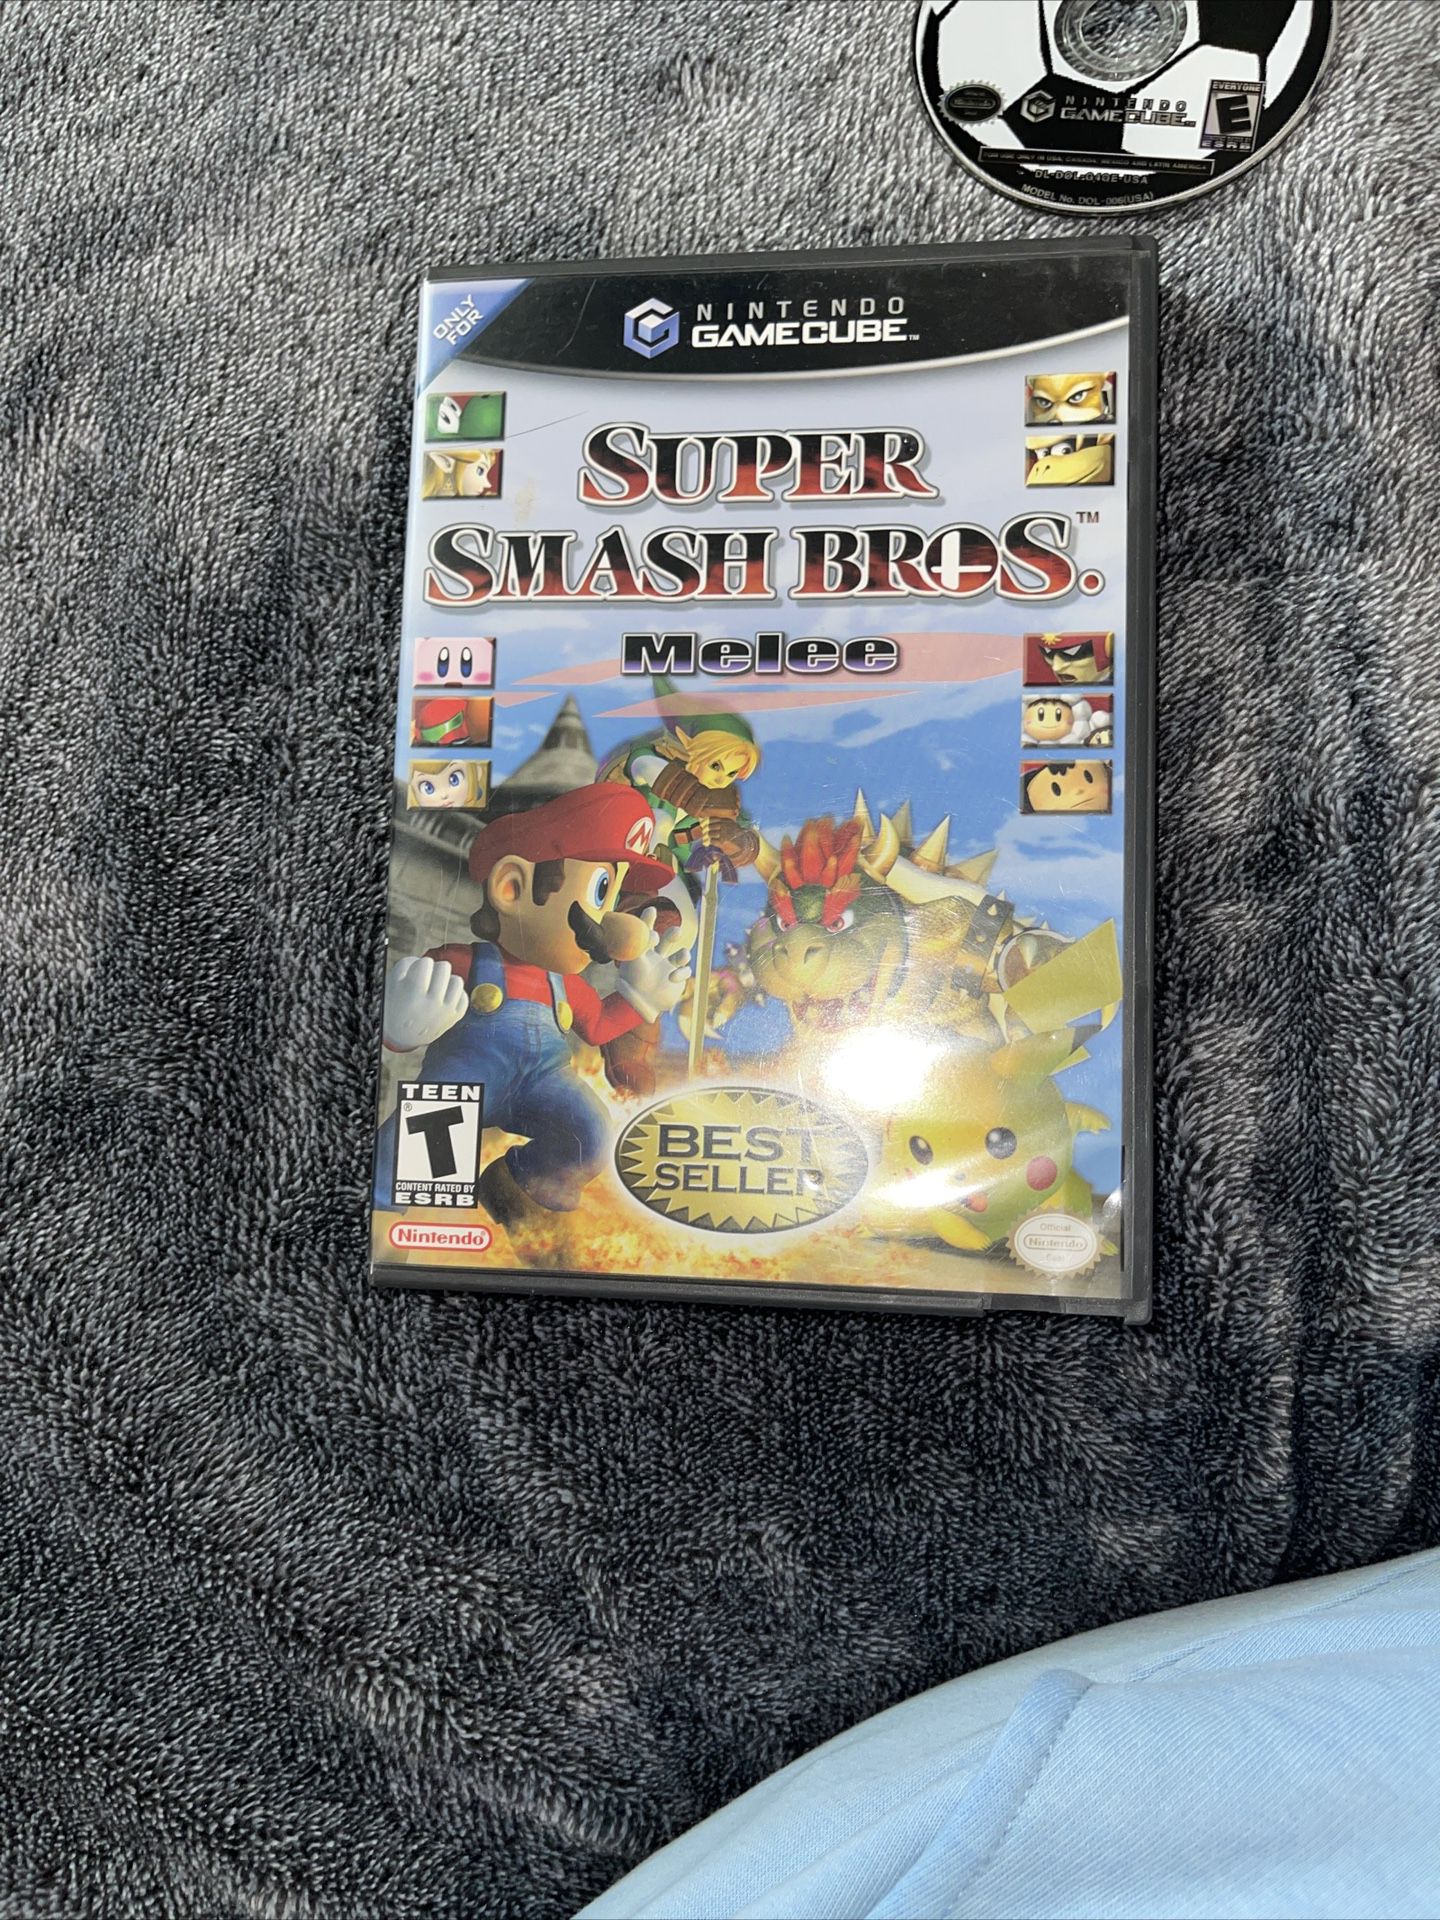 Super Smash Bros Melee (Nintendo GameCube, 2001, With Manual)